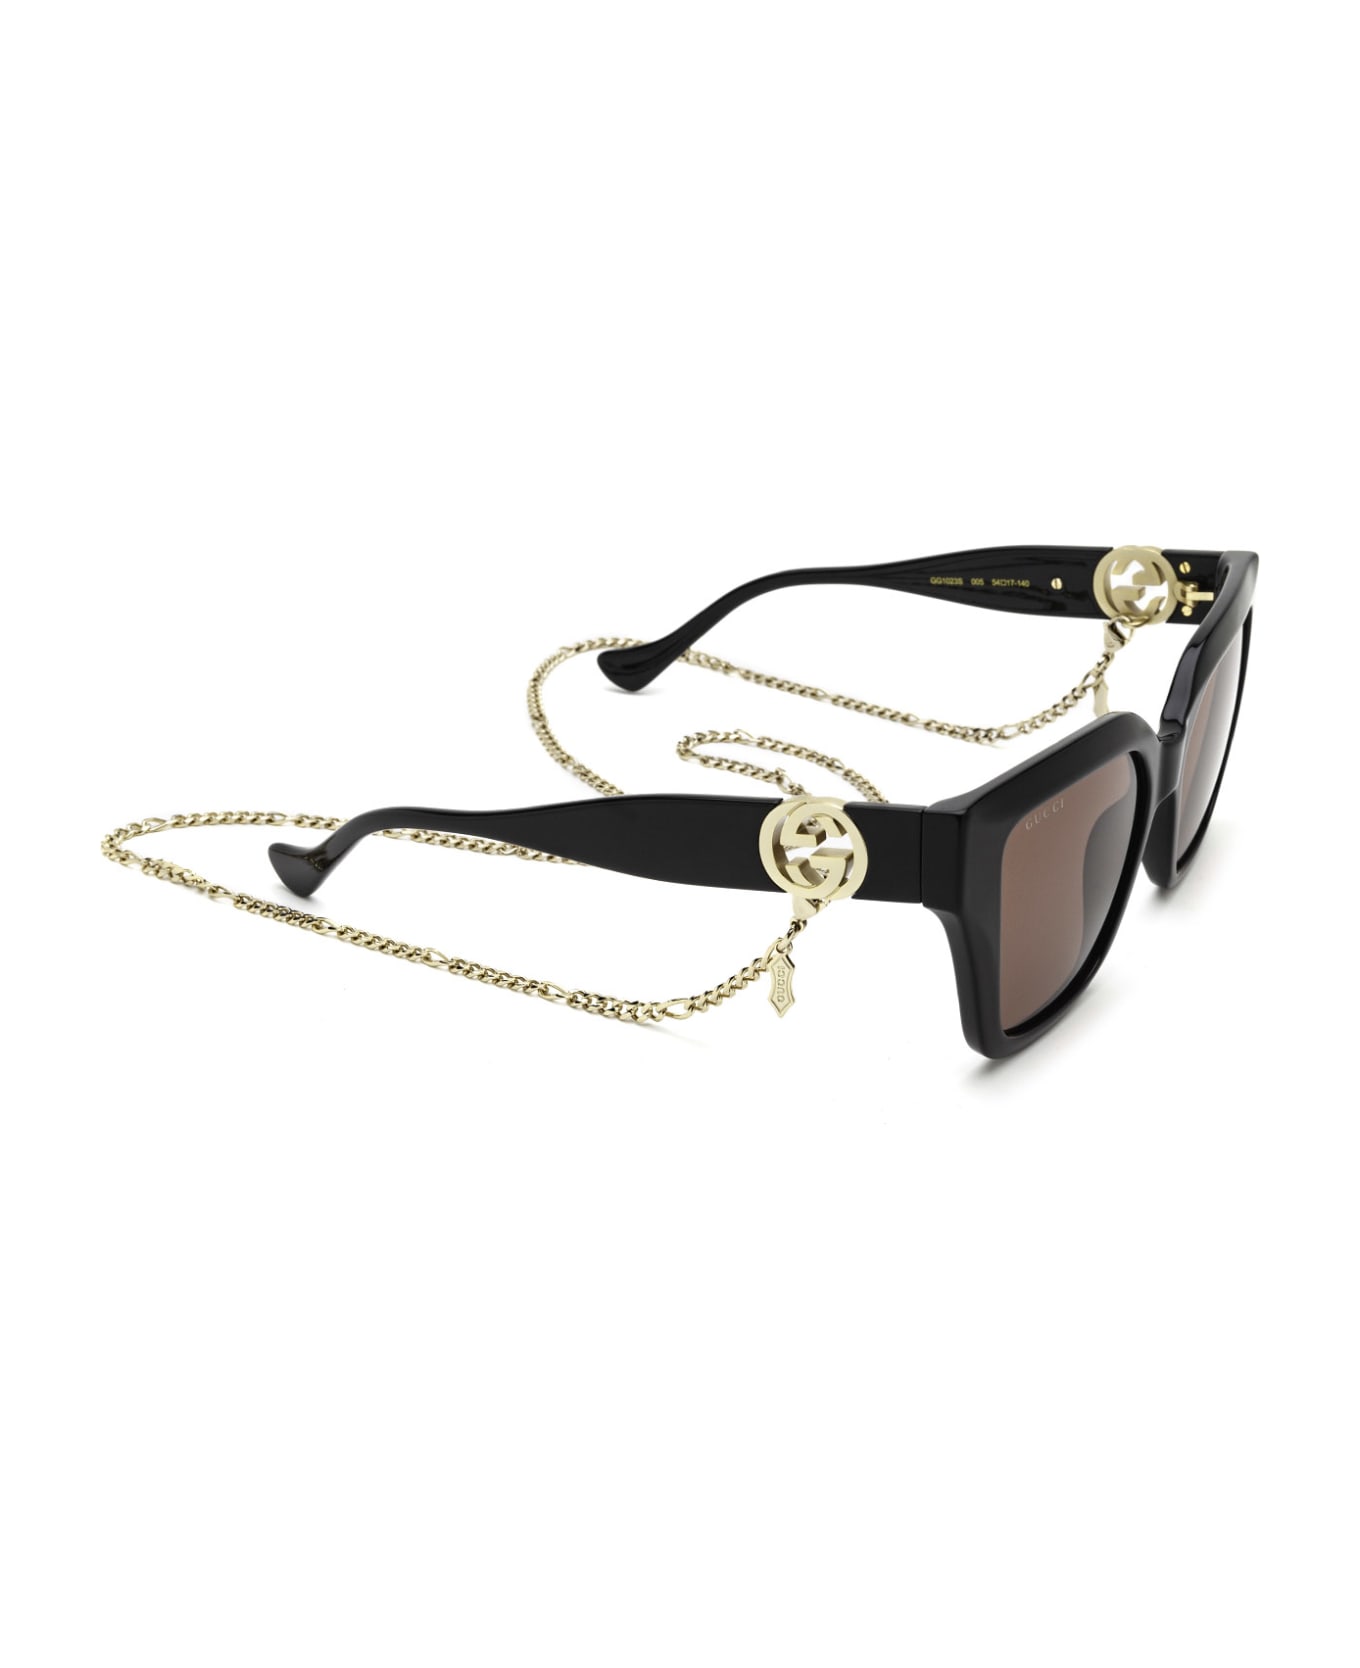 Gucci Eyewear Gg1023s Black Sunglasses - Black